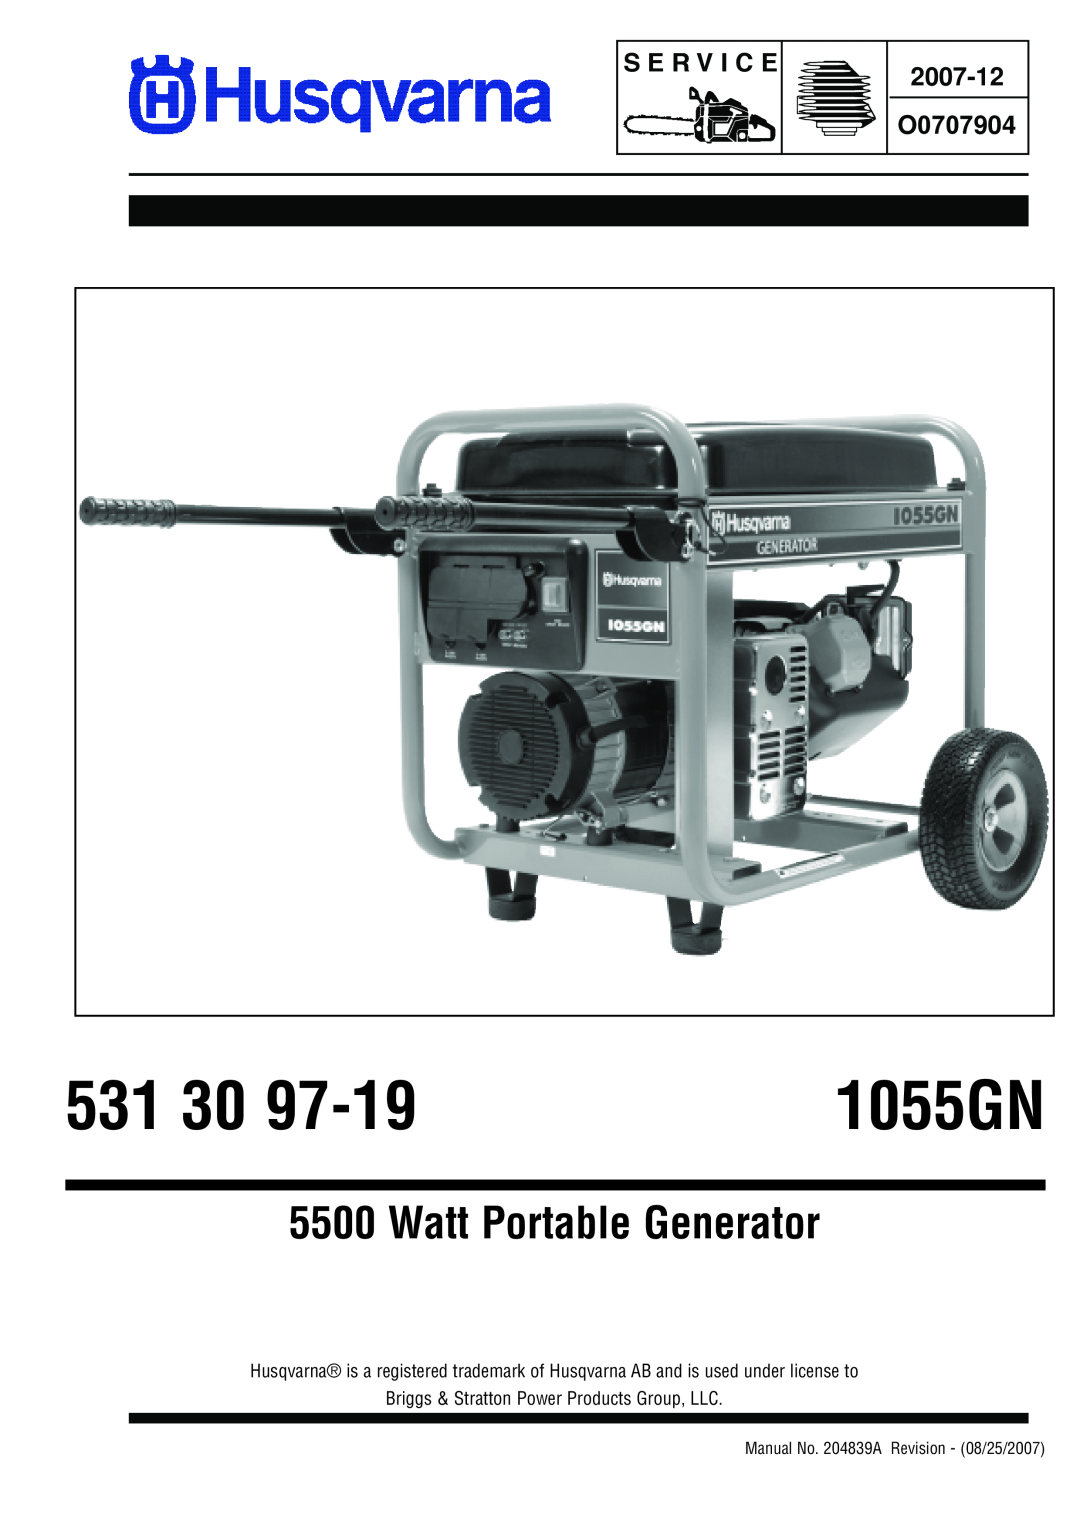 Husqvarna 1055 GN manual Watt Portable Generator, 531, 1055GN, S E R V I C E, 2007-12 O0707904 